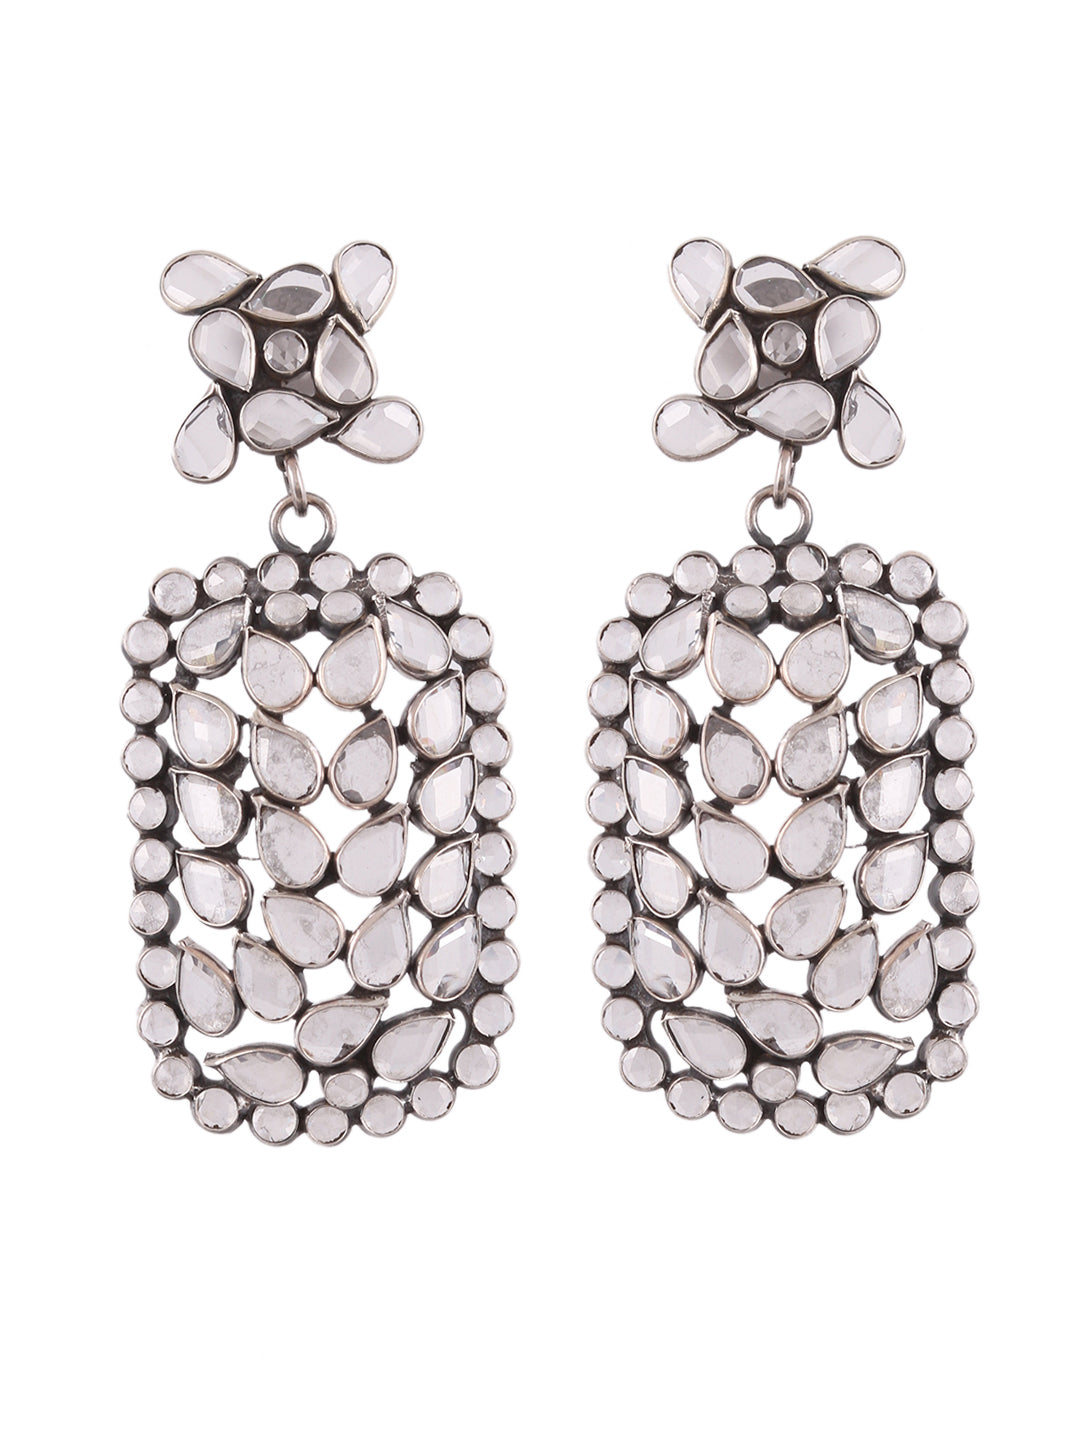 Buy Trendy Silver Earrings Online - Floral Drop Earrings by Quirksmith